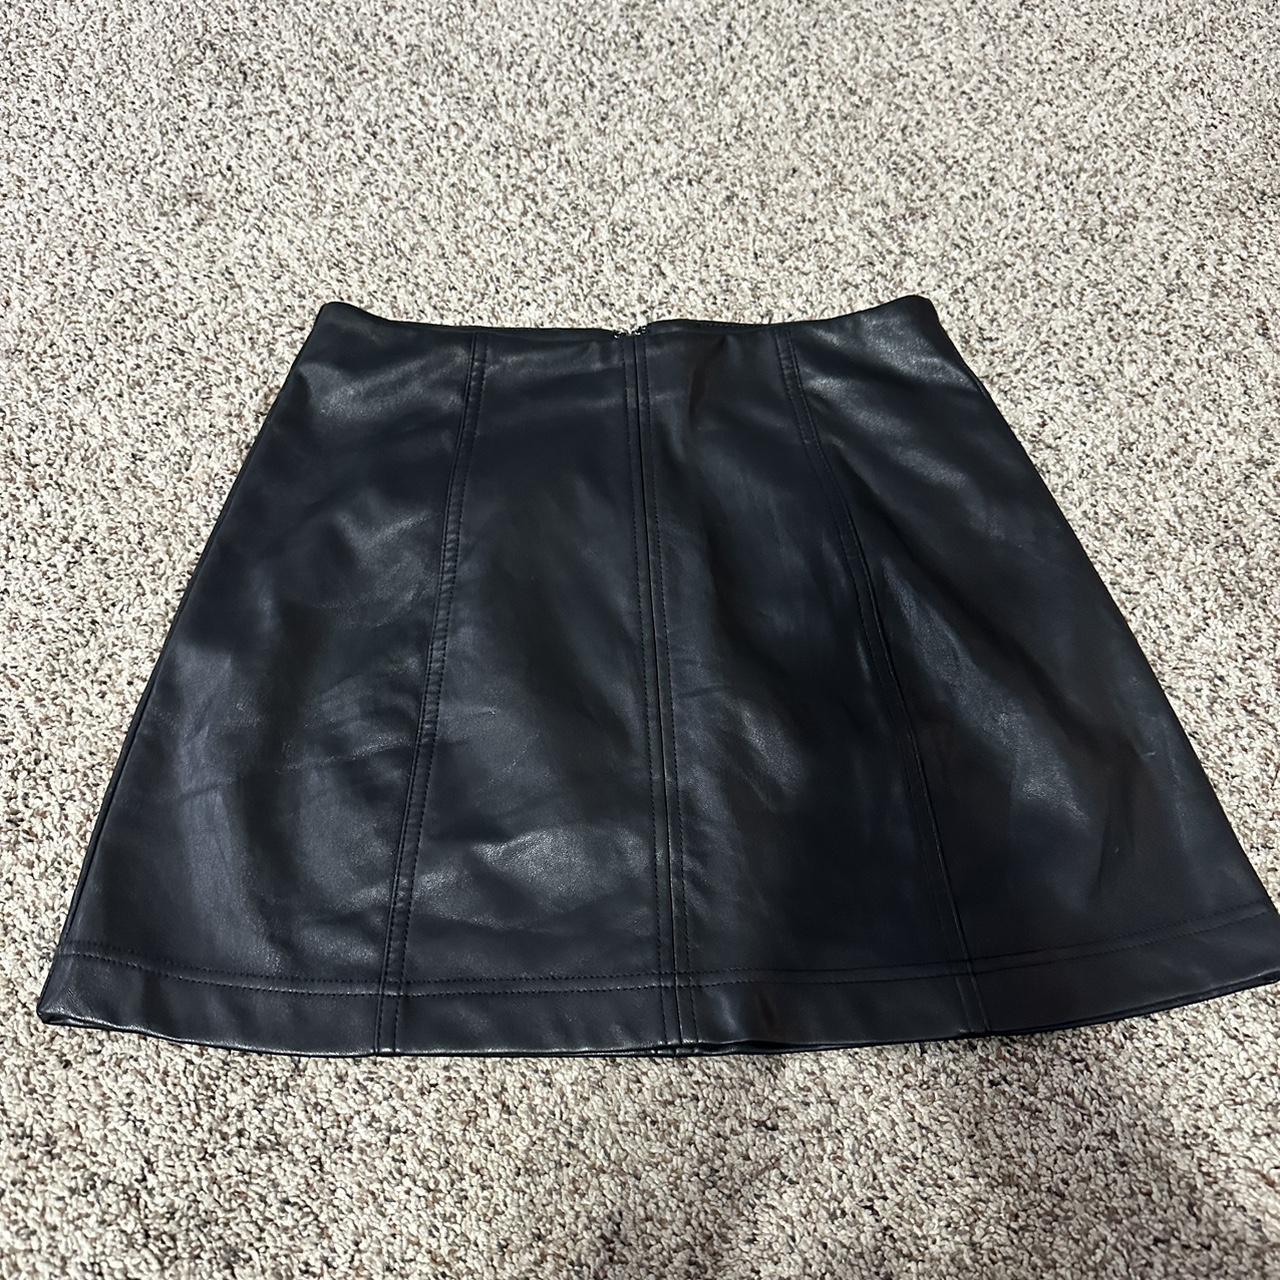 leather mini skirt - (fake leather) - Depop